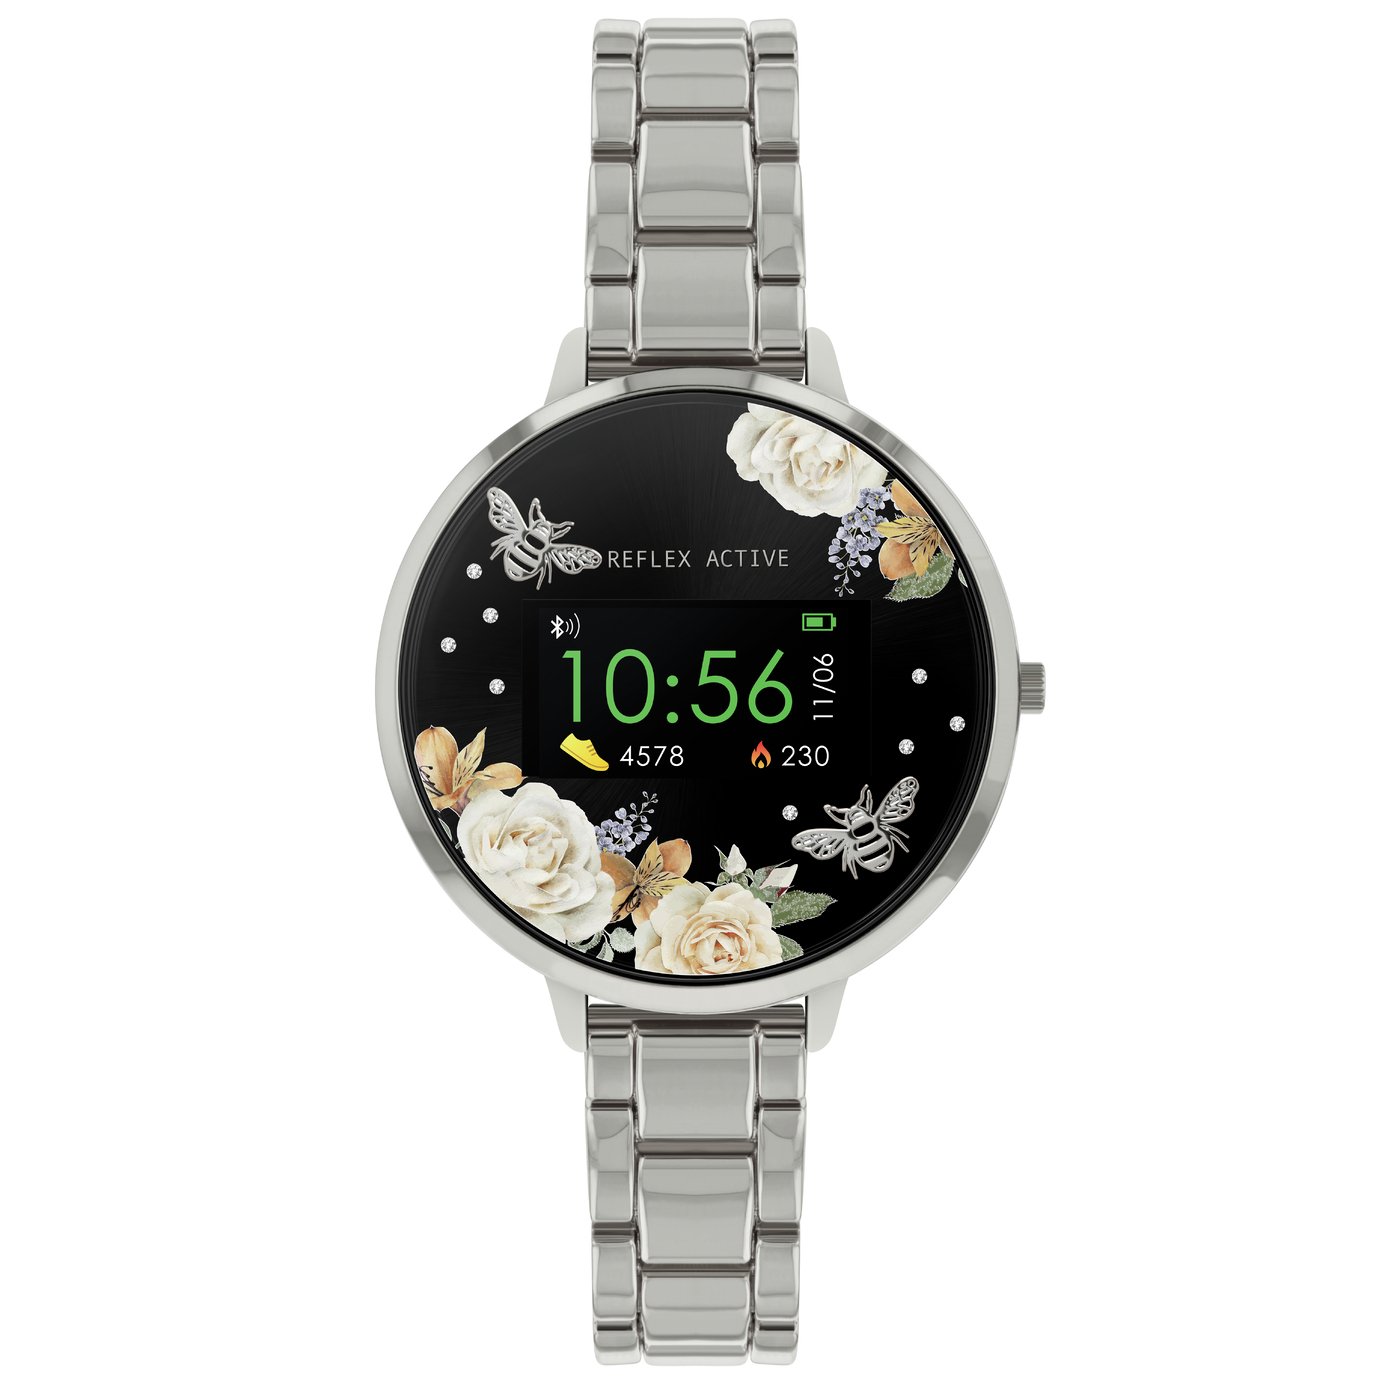 Reflex Active Series 3 Silver Bracelet Smart Watch